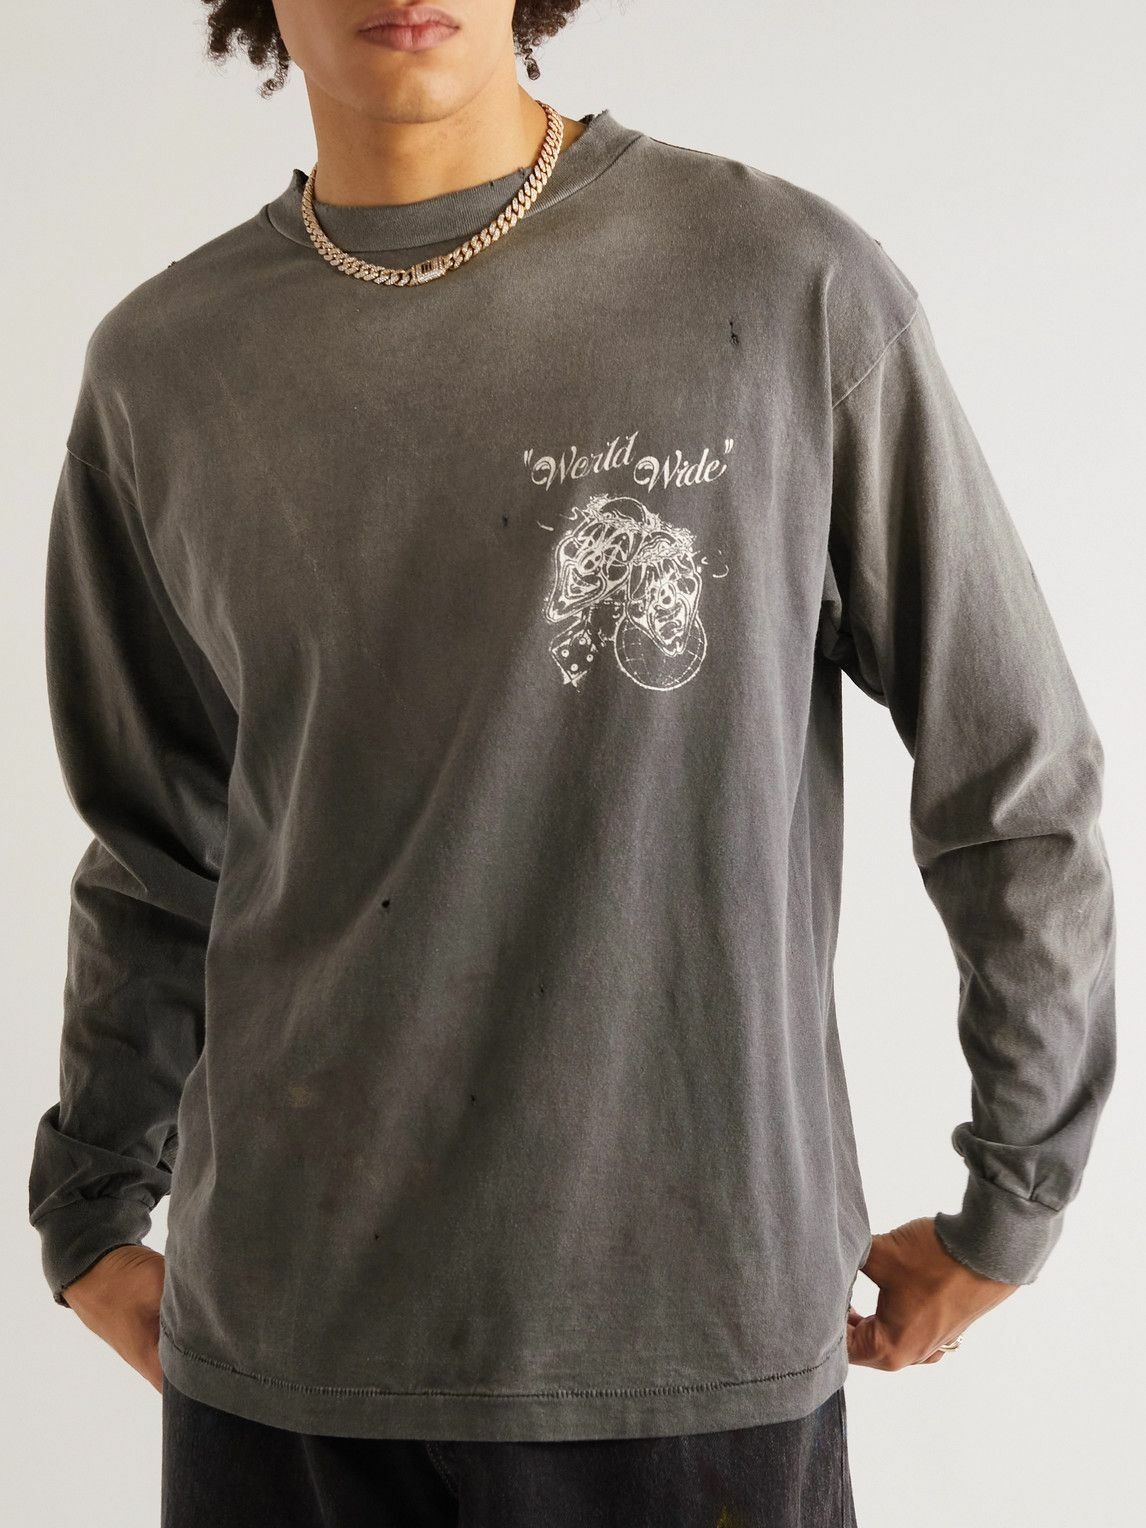 SAINT Mxxxxxx - Born X Raised Distressed Printed Cotton-Jersey T-Shirt - Black